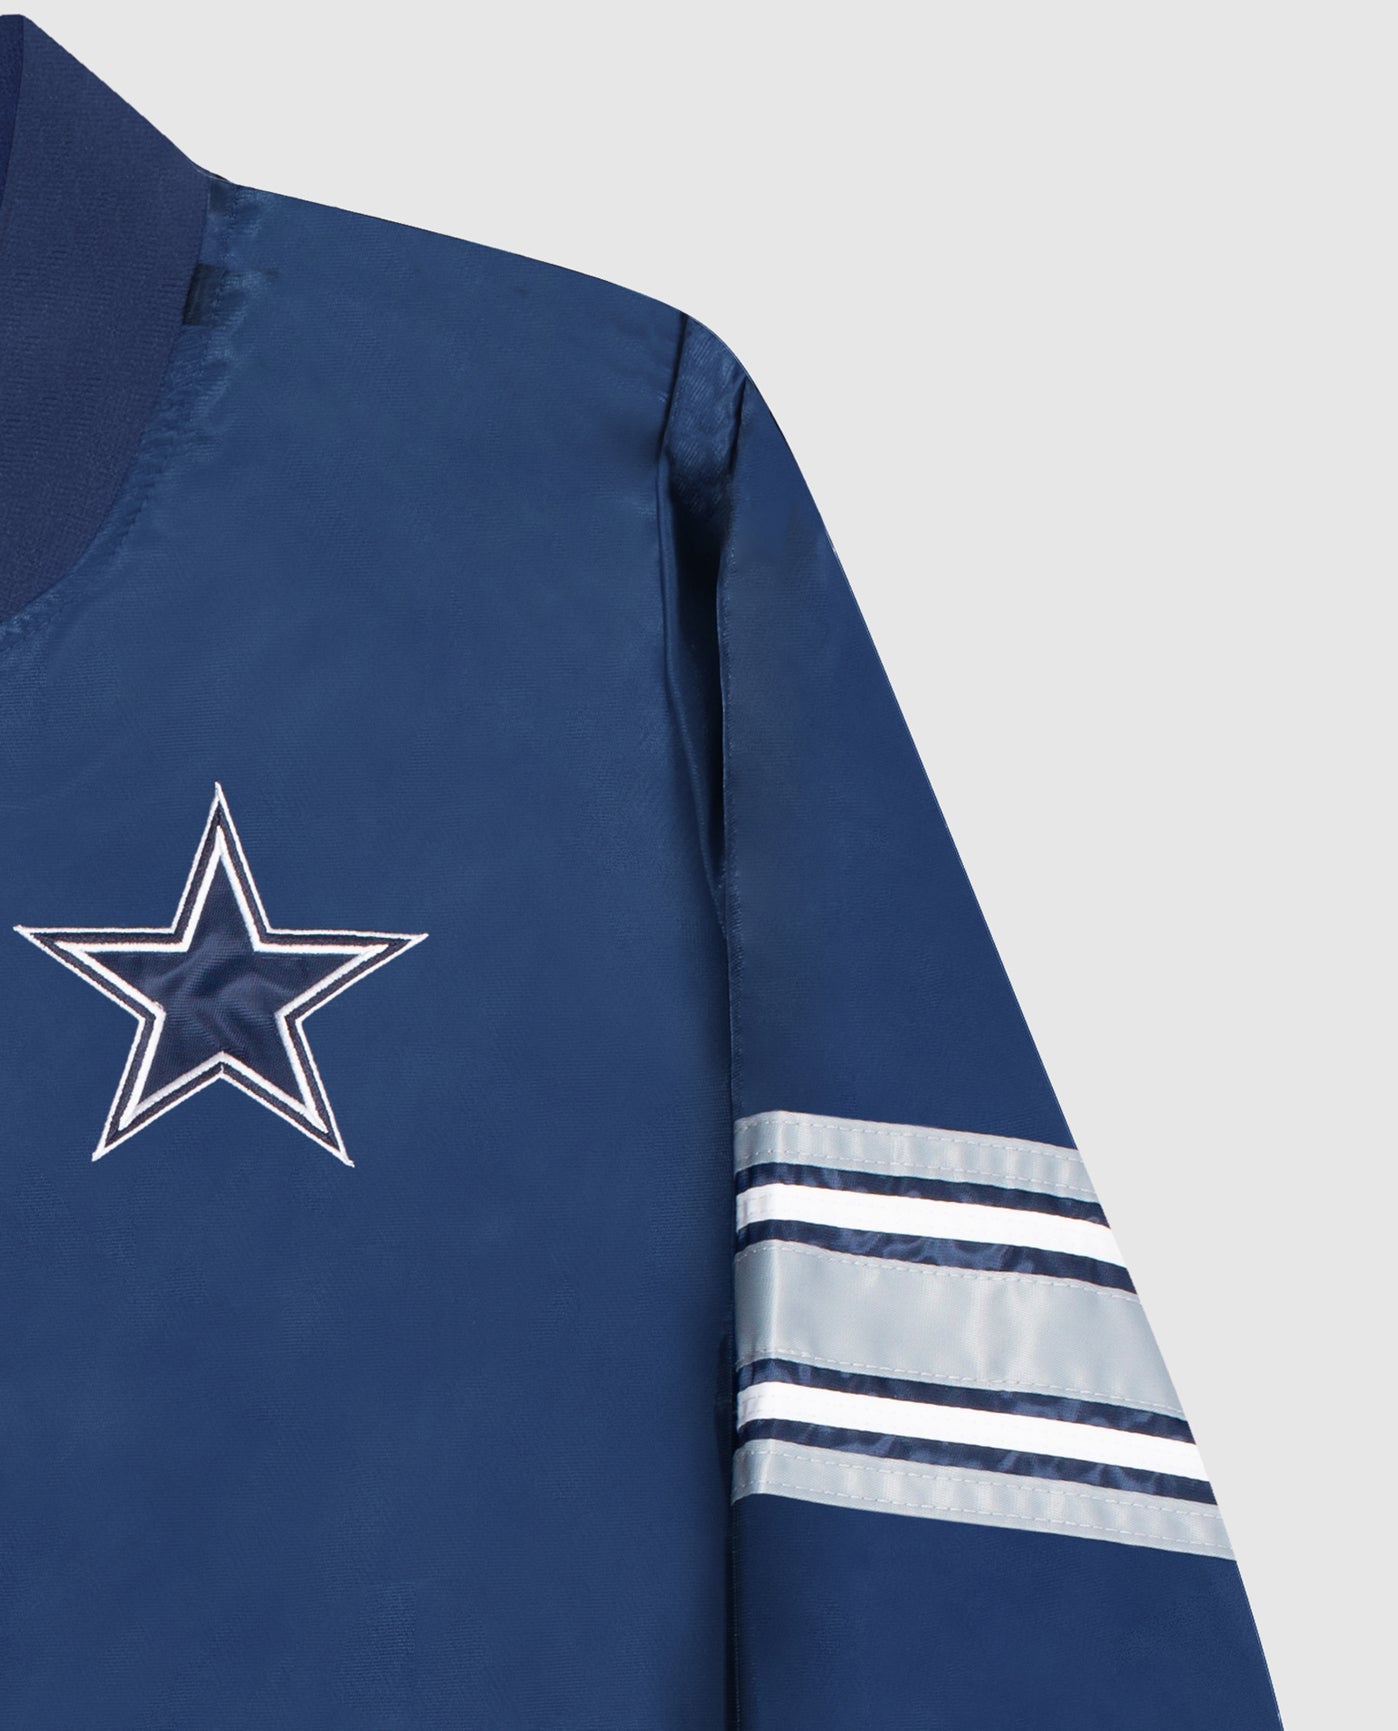 Dallas Cowboys Snap-Front Bomber Jacket